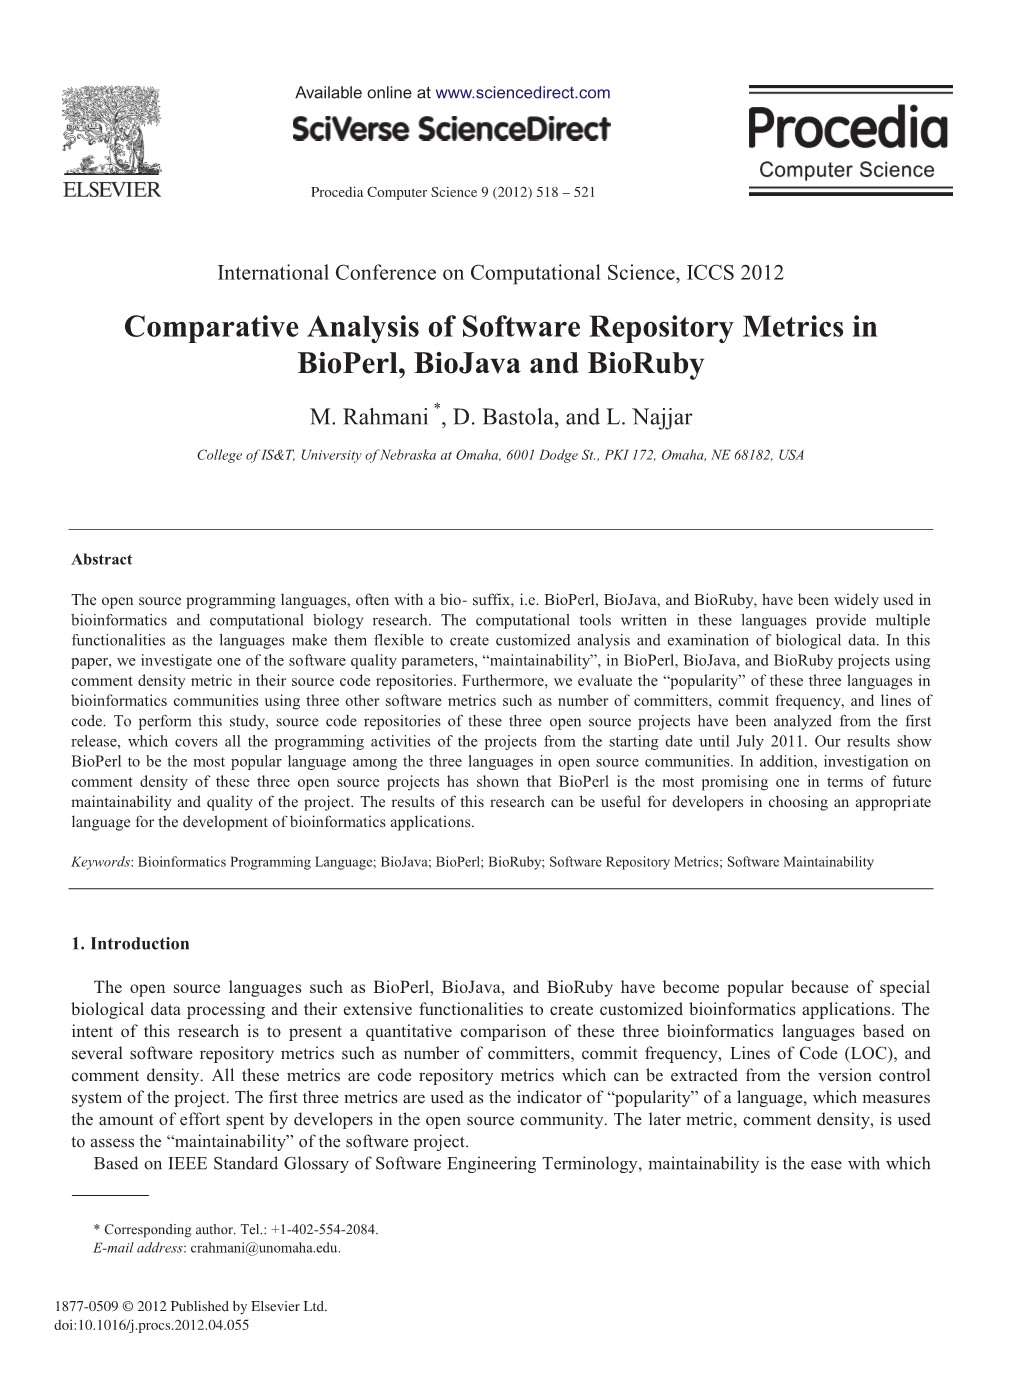 Comparative Analysis of Software Repository Metrics in Bioperl, Biojava and Bioruby